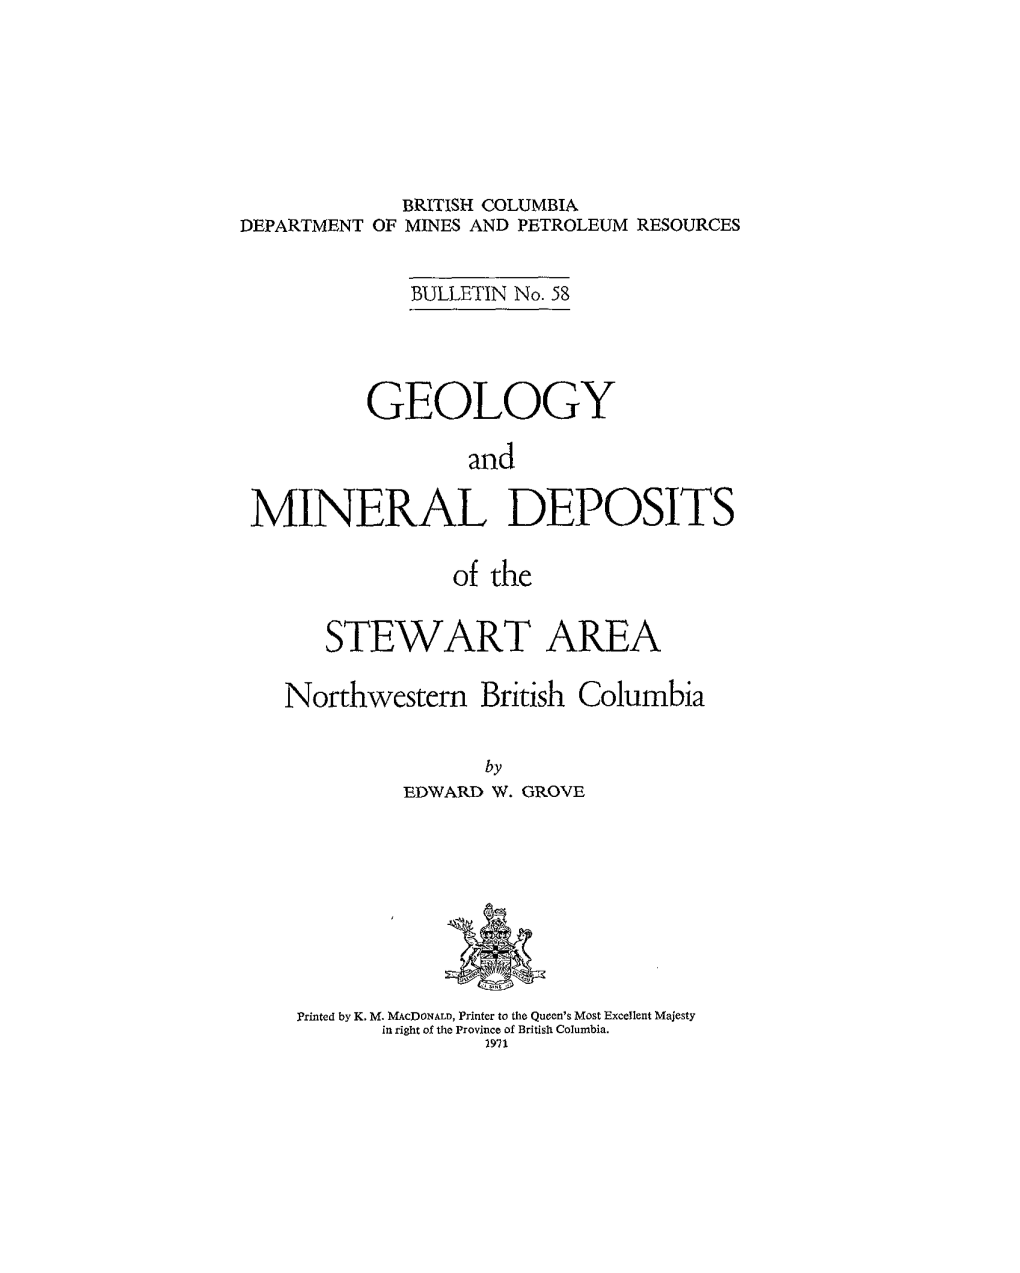 MINERAL DEPOSITS of the STEWART AREA Northwestern British Columbia